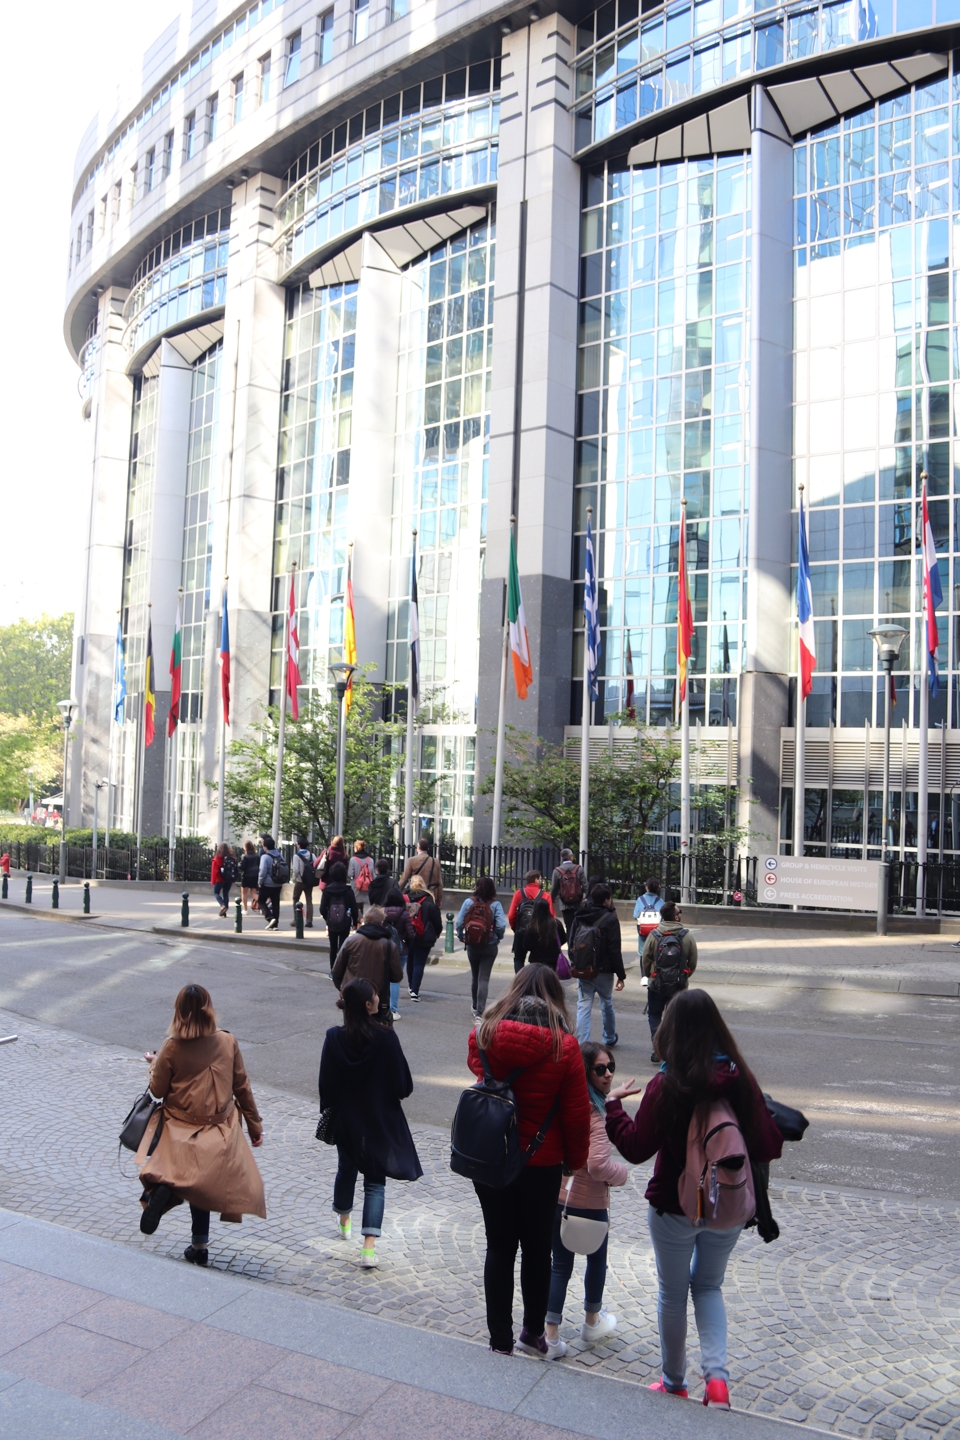 Students walking towards the EU Parliament building